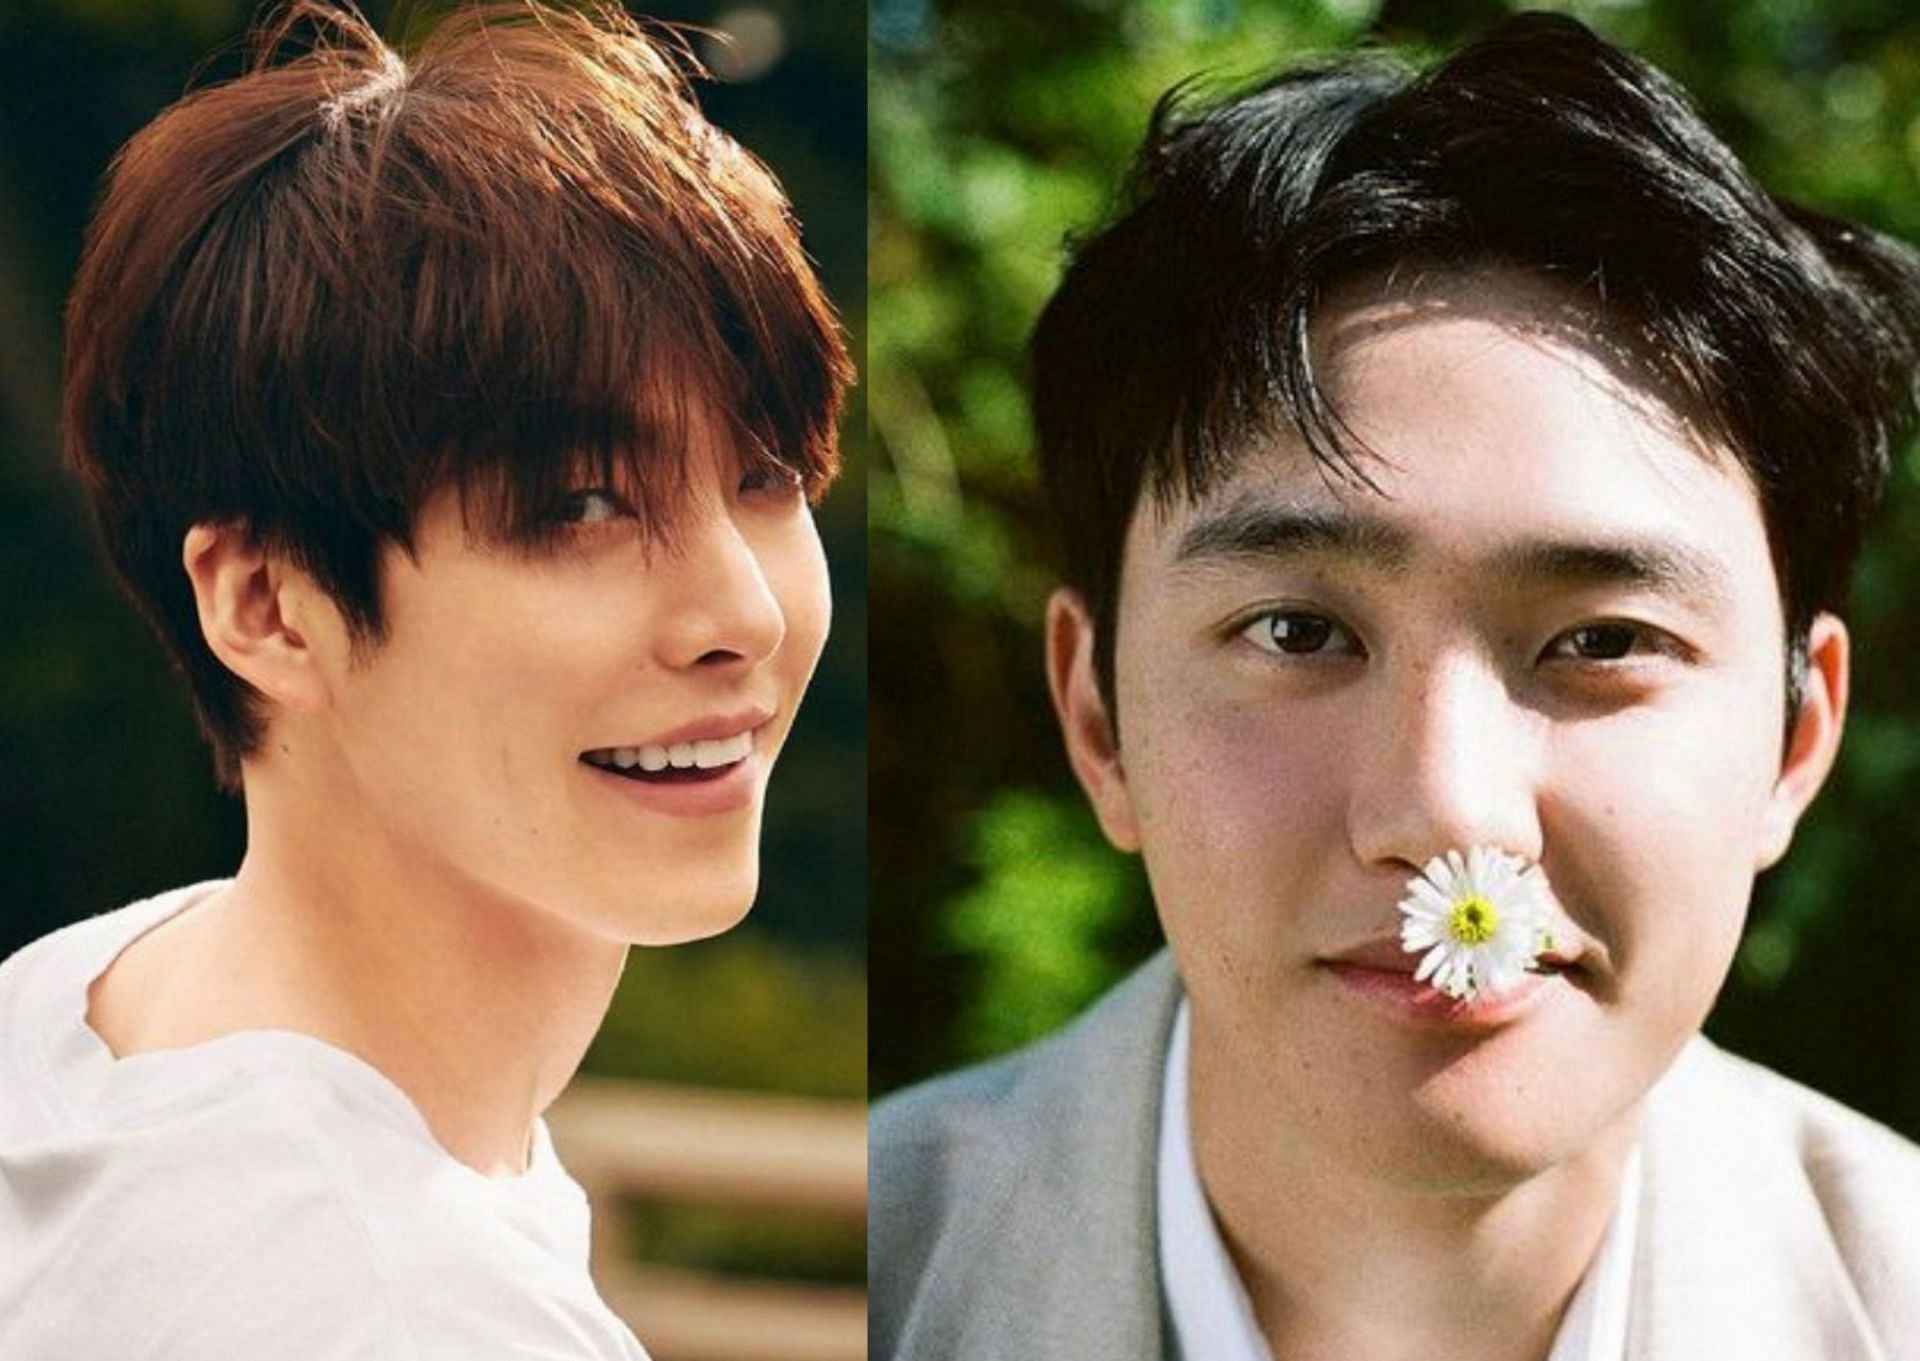 A still of the two celebrities (Image via Instagram/@_kimwoonim/@weareone.exo)